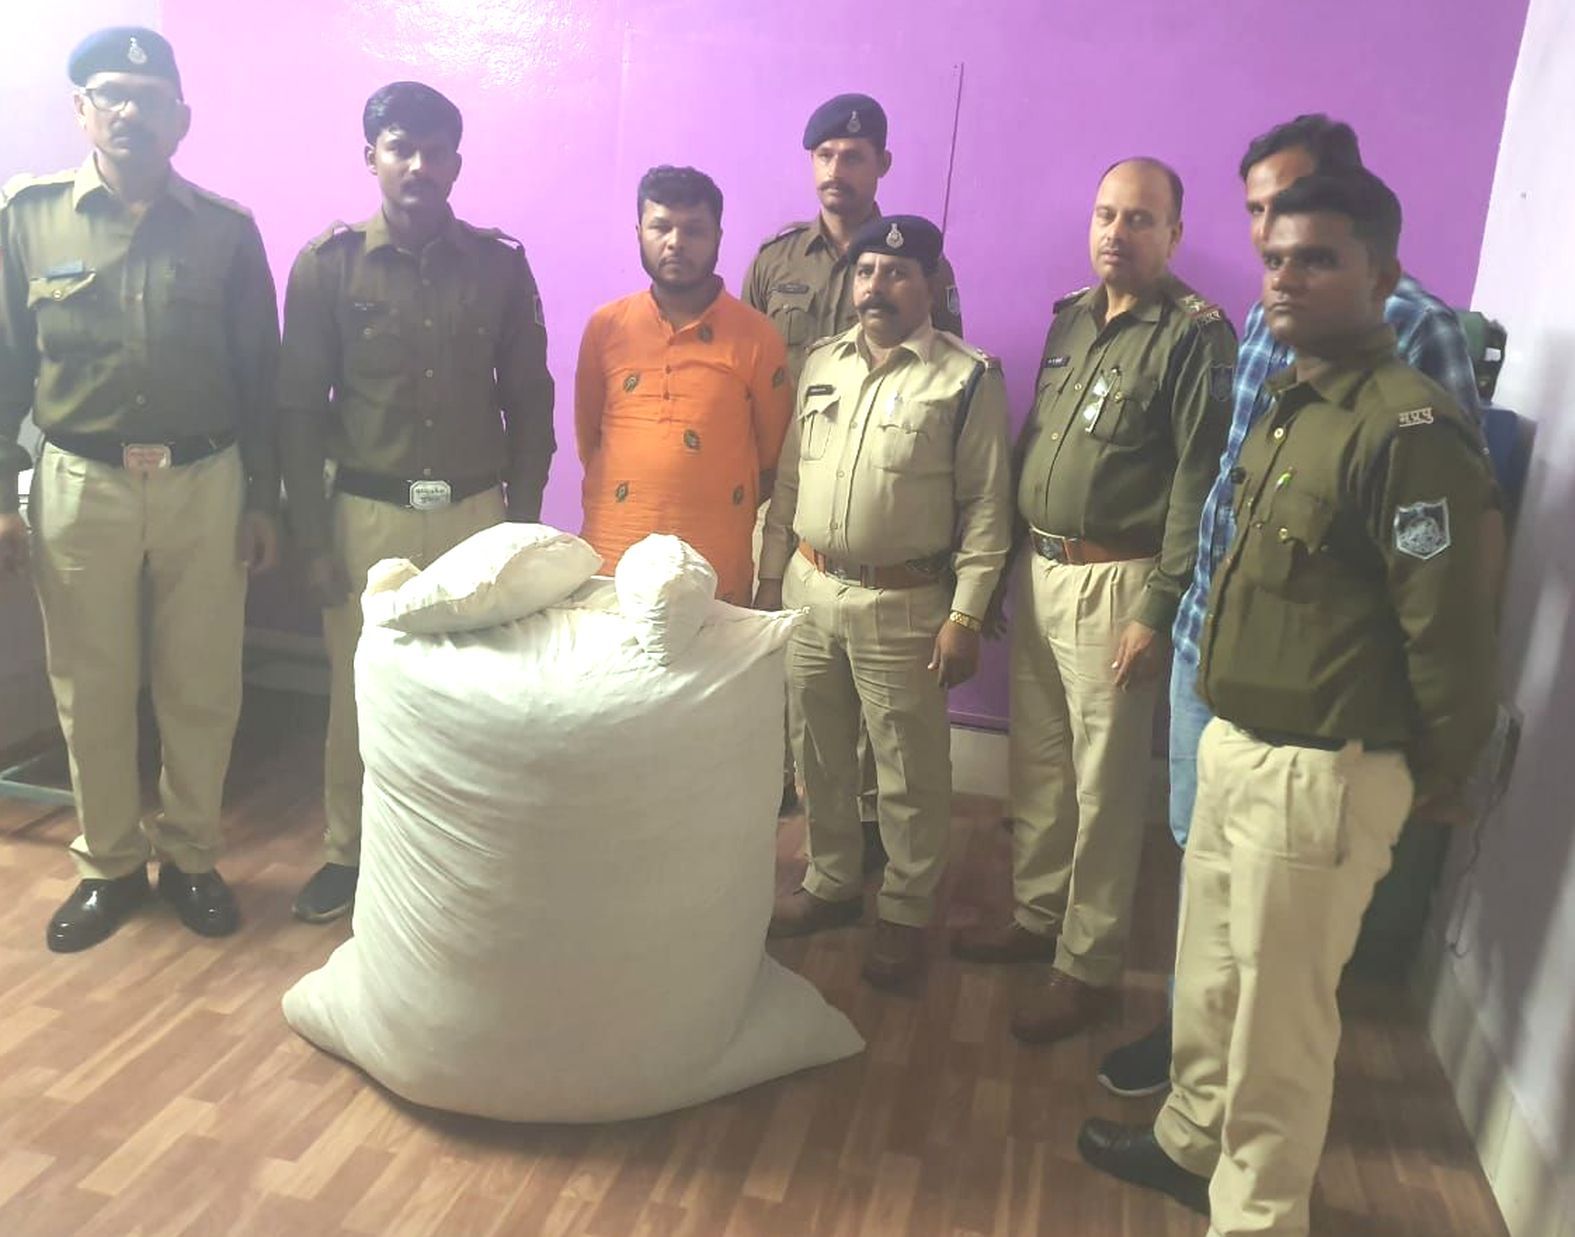 52 kg hemp caught in khargone